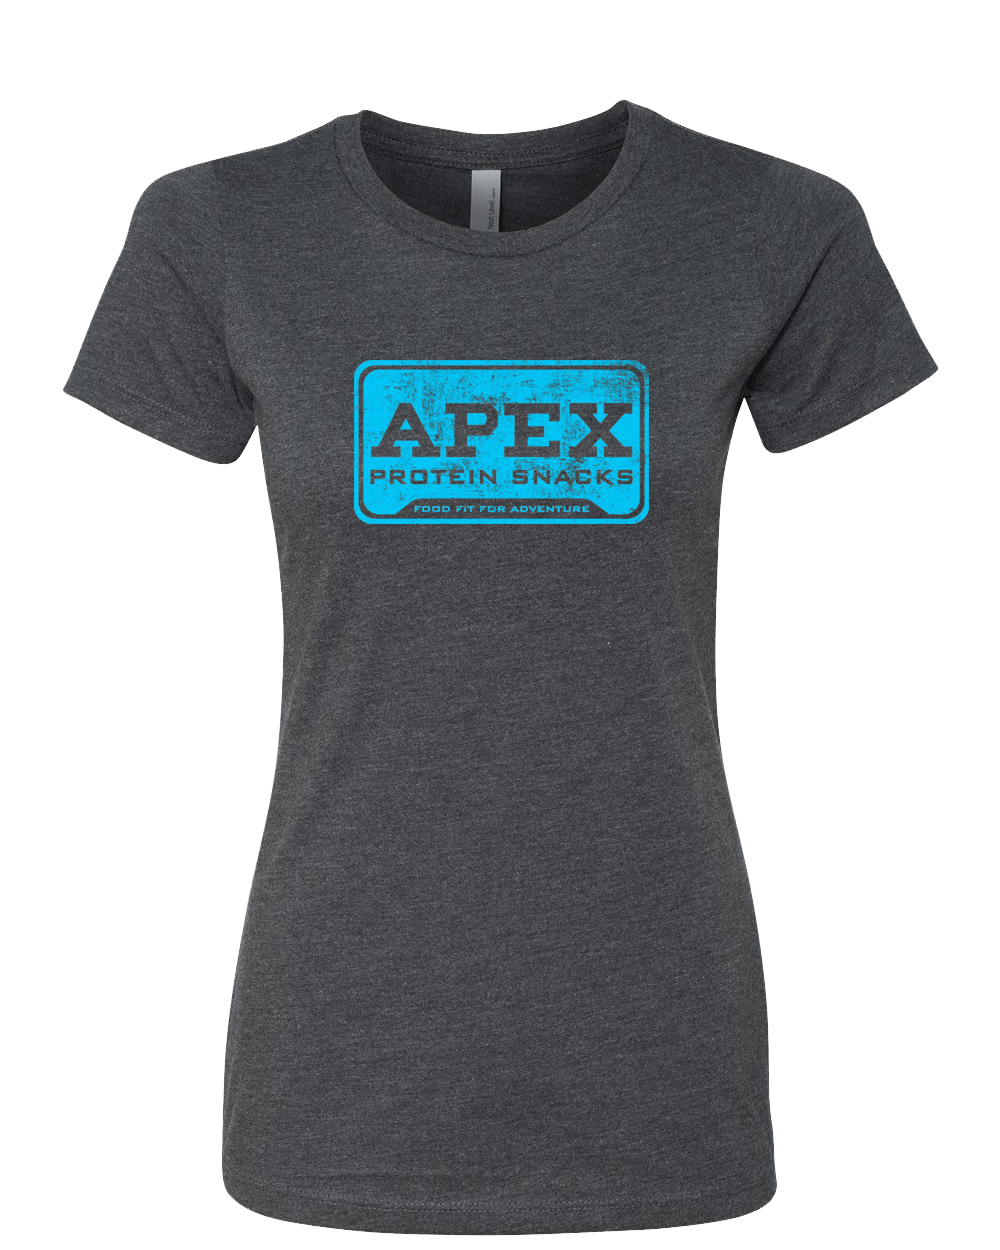 Apex Women Shirt - Black with blue logo